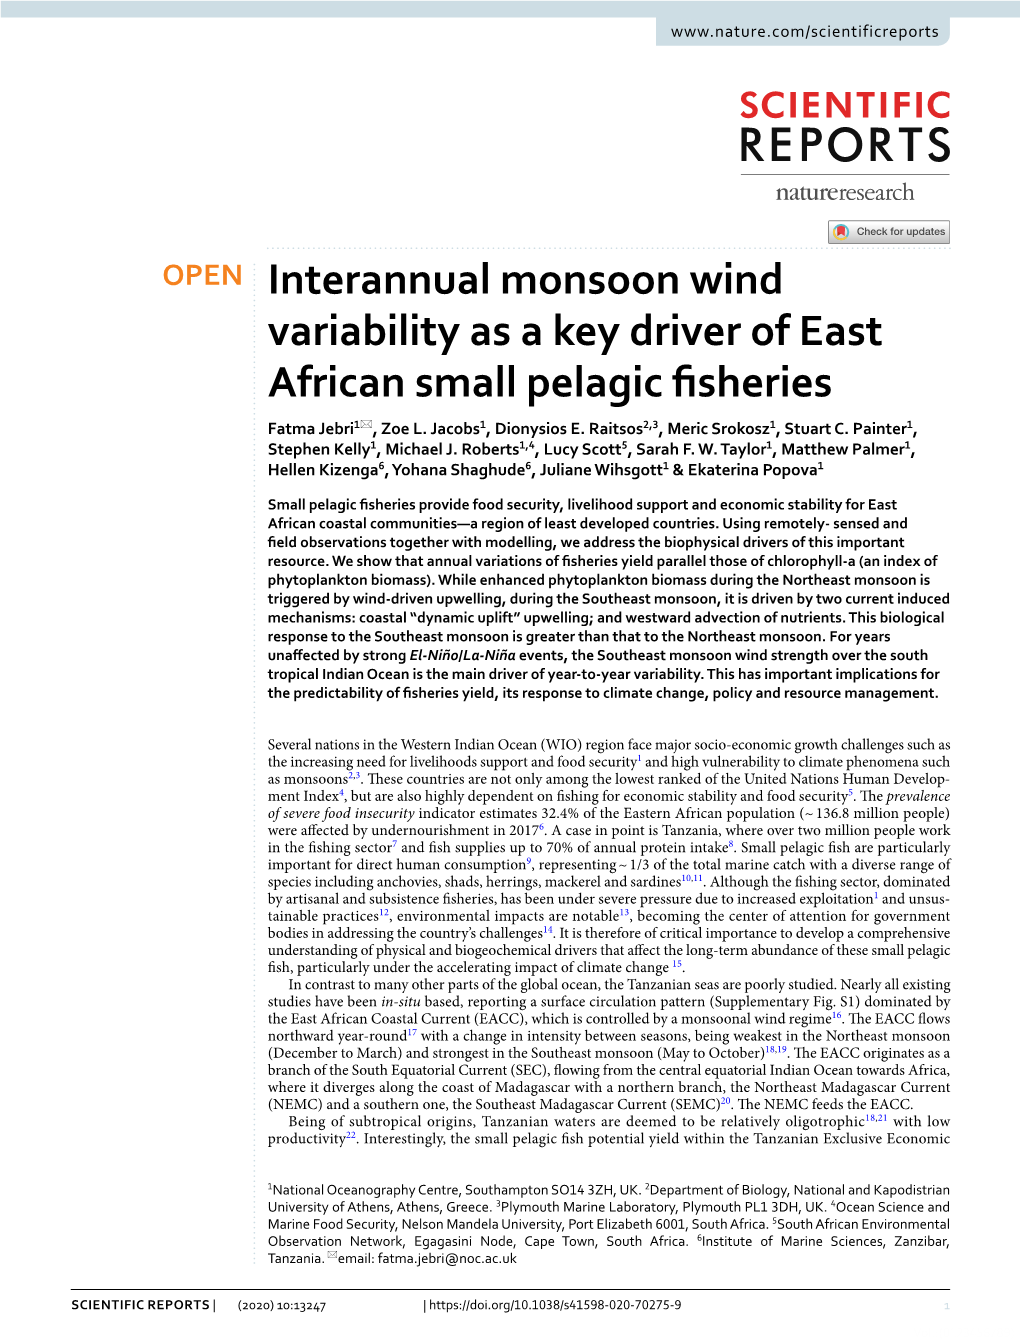 Interannual Monsoon Wind Variability As a Key Driver of East African Small Pelagic Fsheries Fatma Jebri1*, Zoe L